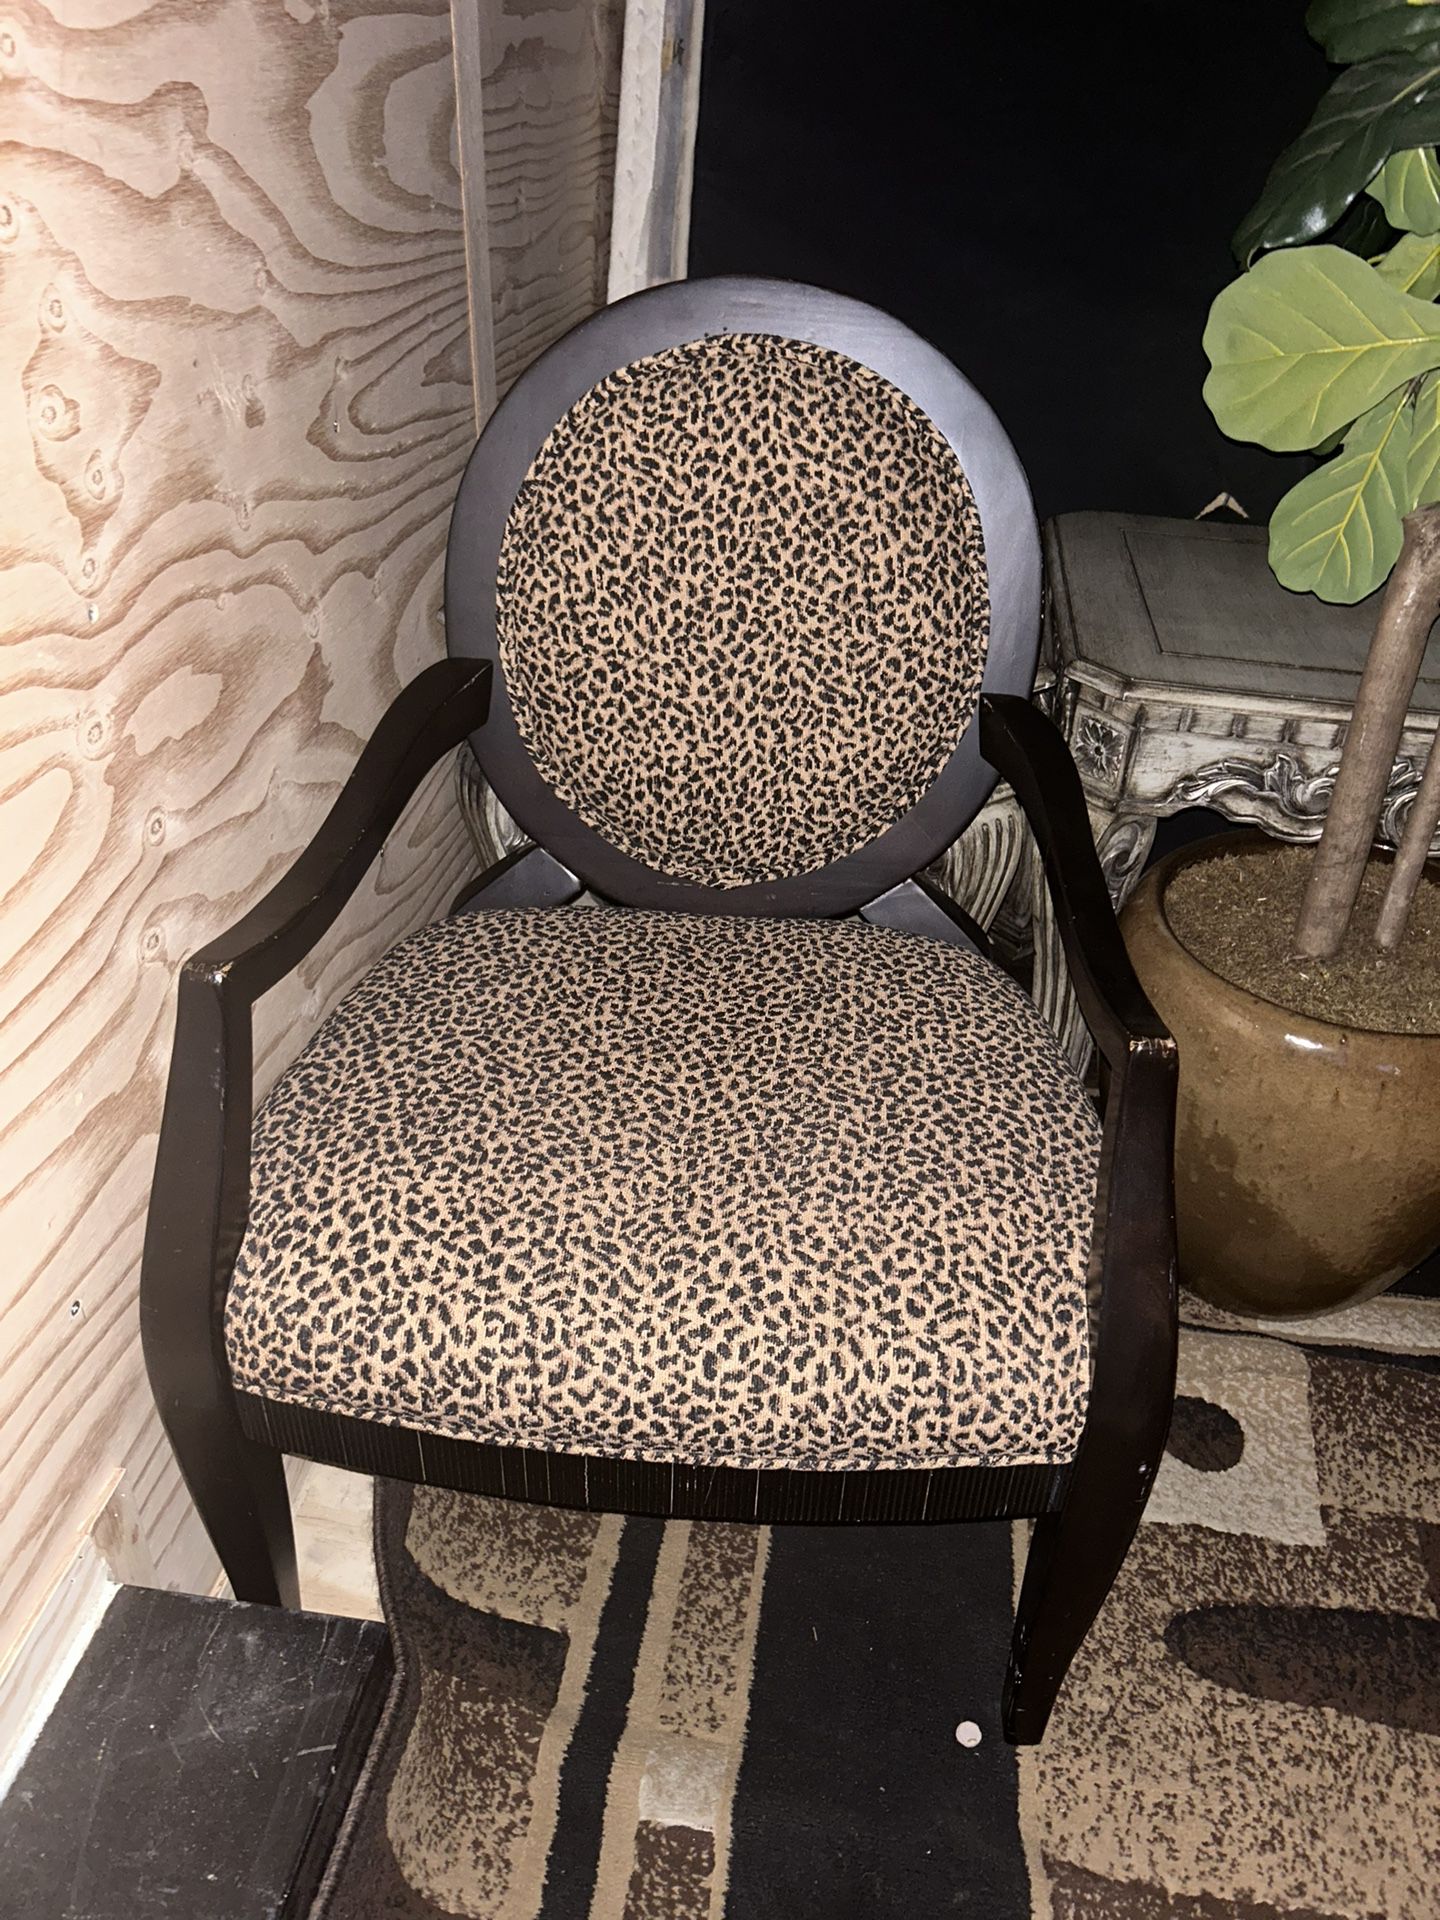 Leopard Print Sitting Chair